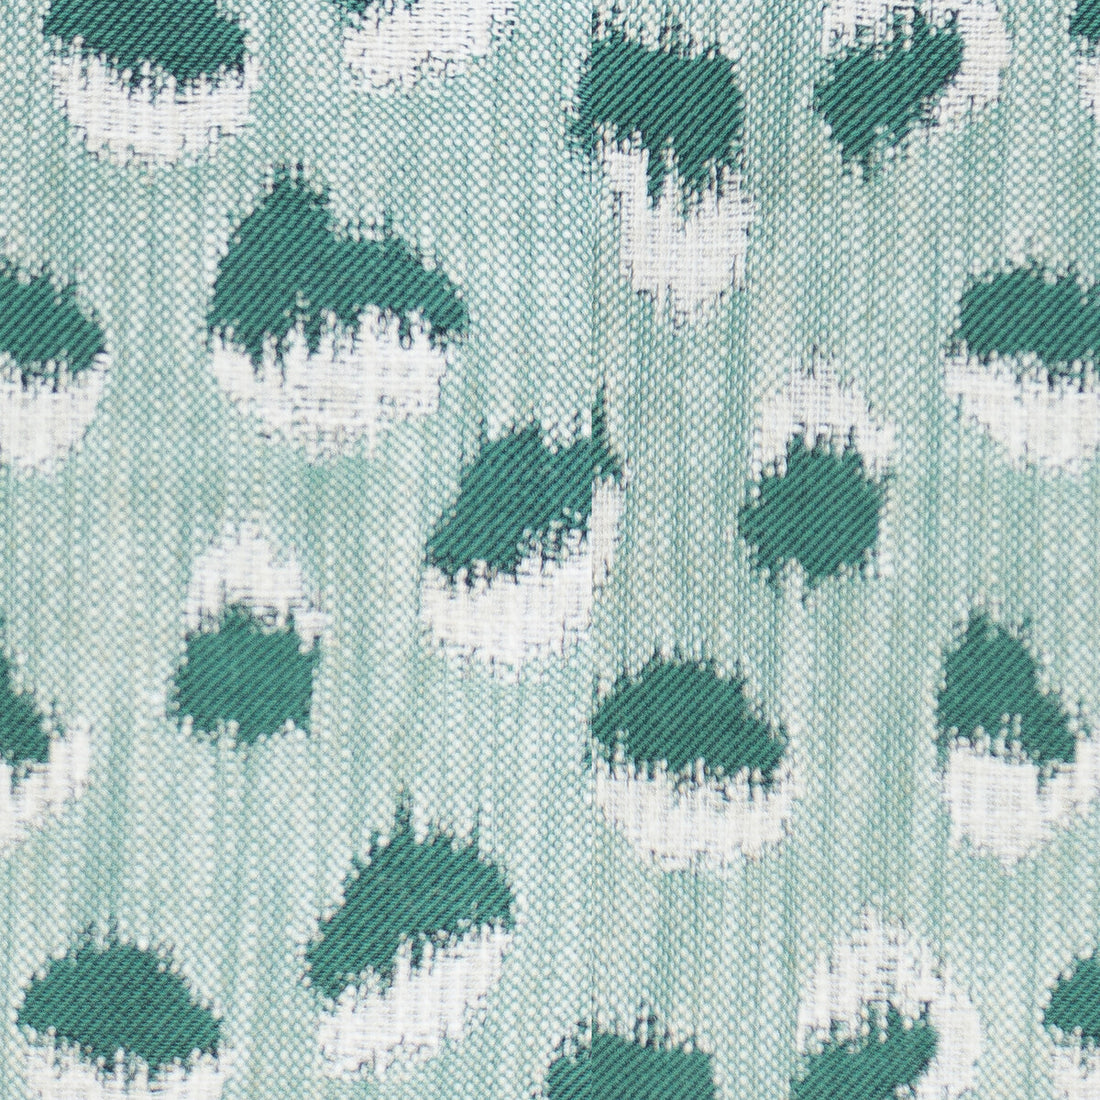 Castilla fabric in verde color - pattern GDT5569.002.0 - by Gaston y Daniela in the Gaston Nuevo Mundo collection